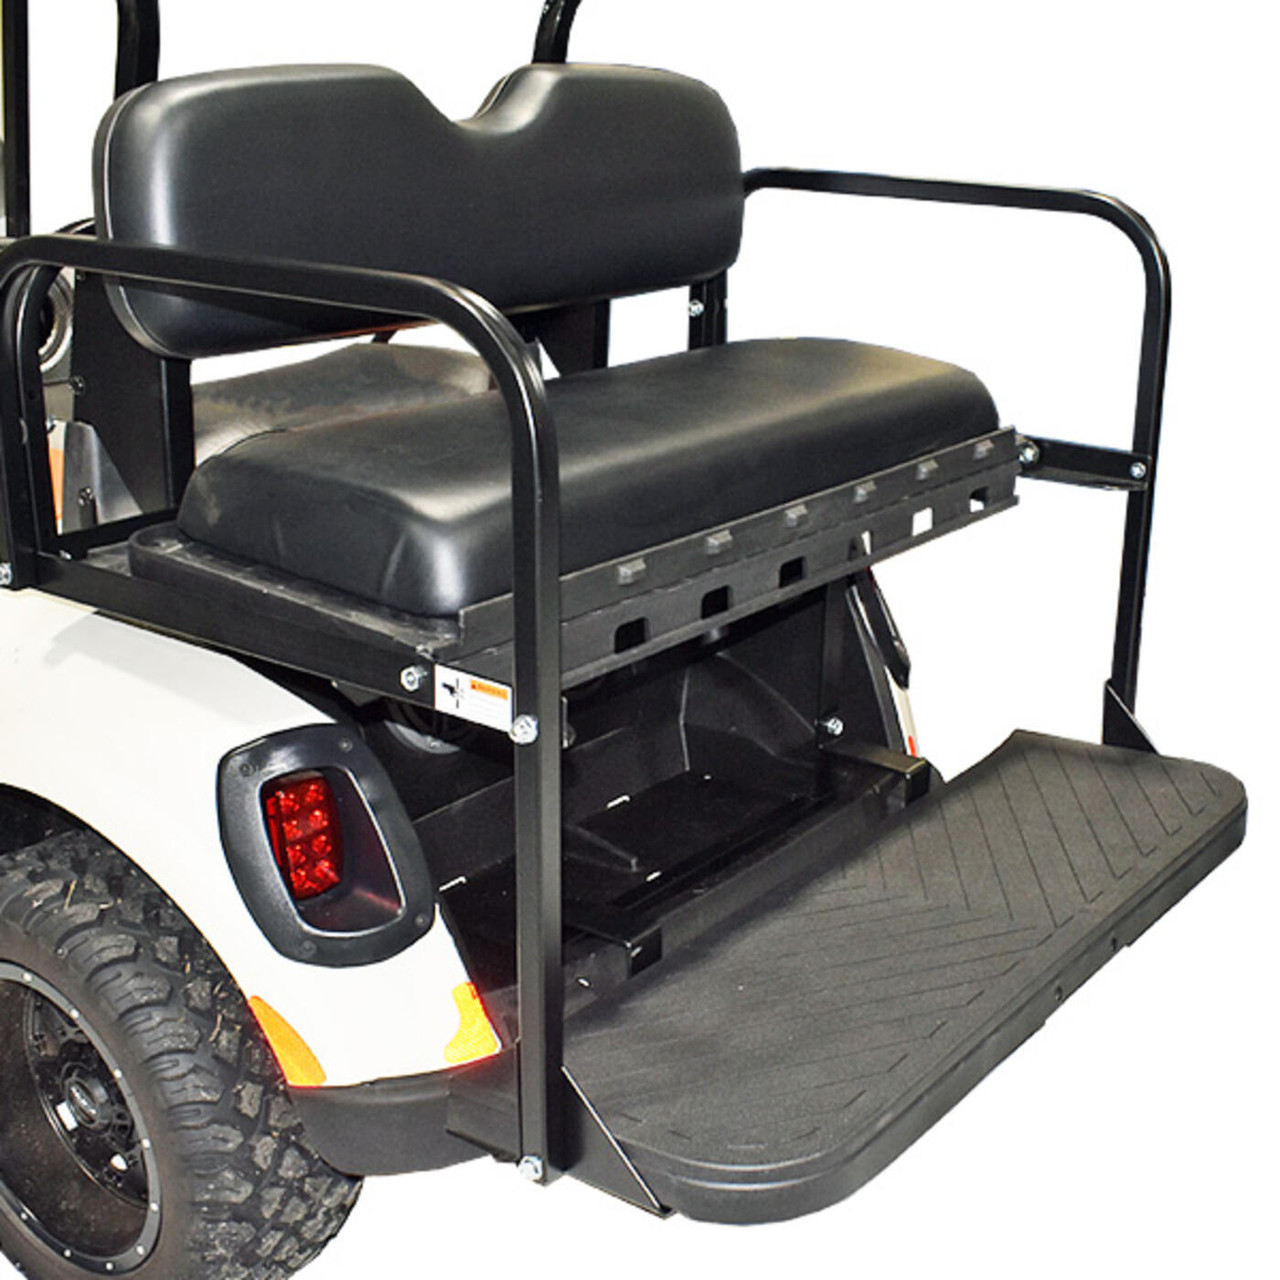 GTW Mach3 Black Rear Seat Kit for Club Car Precedent/Tempo/Onward Golf Cart, 01-142